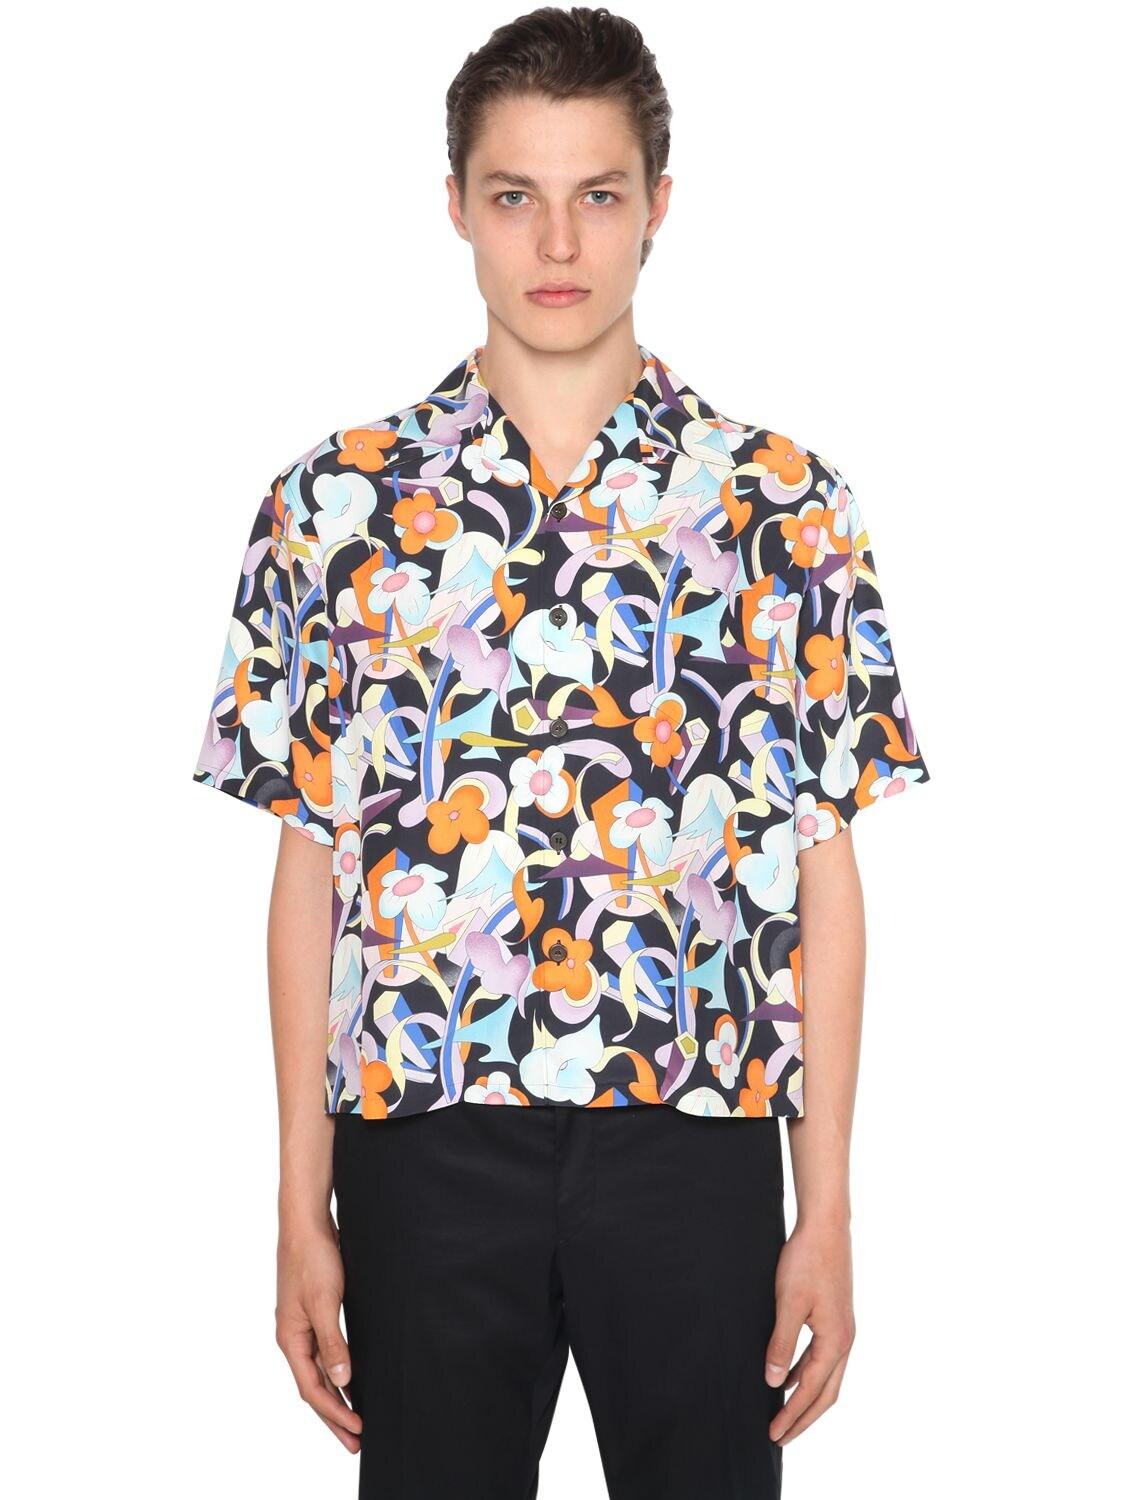 Prada Pungé Flower Printed Bowling Shirt for Men - Lyst